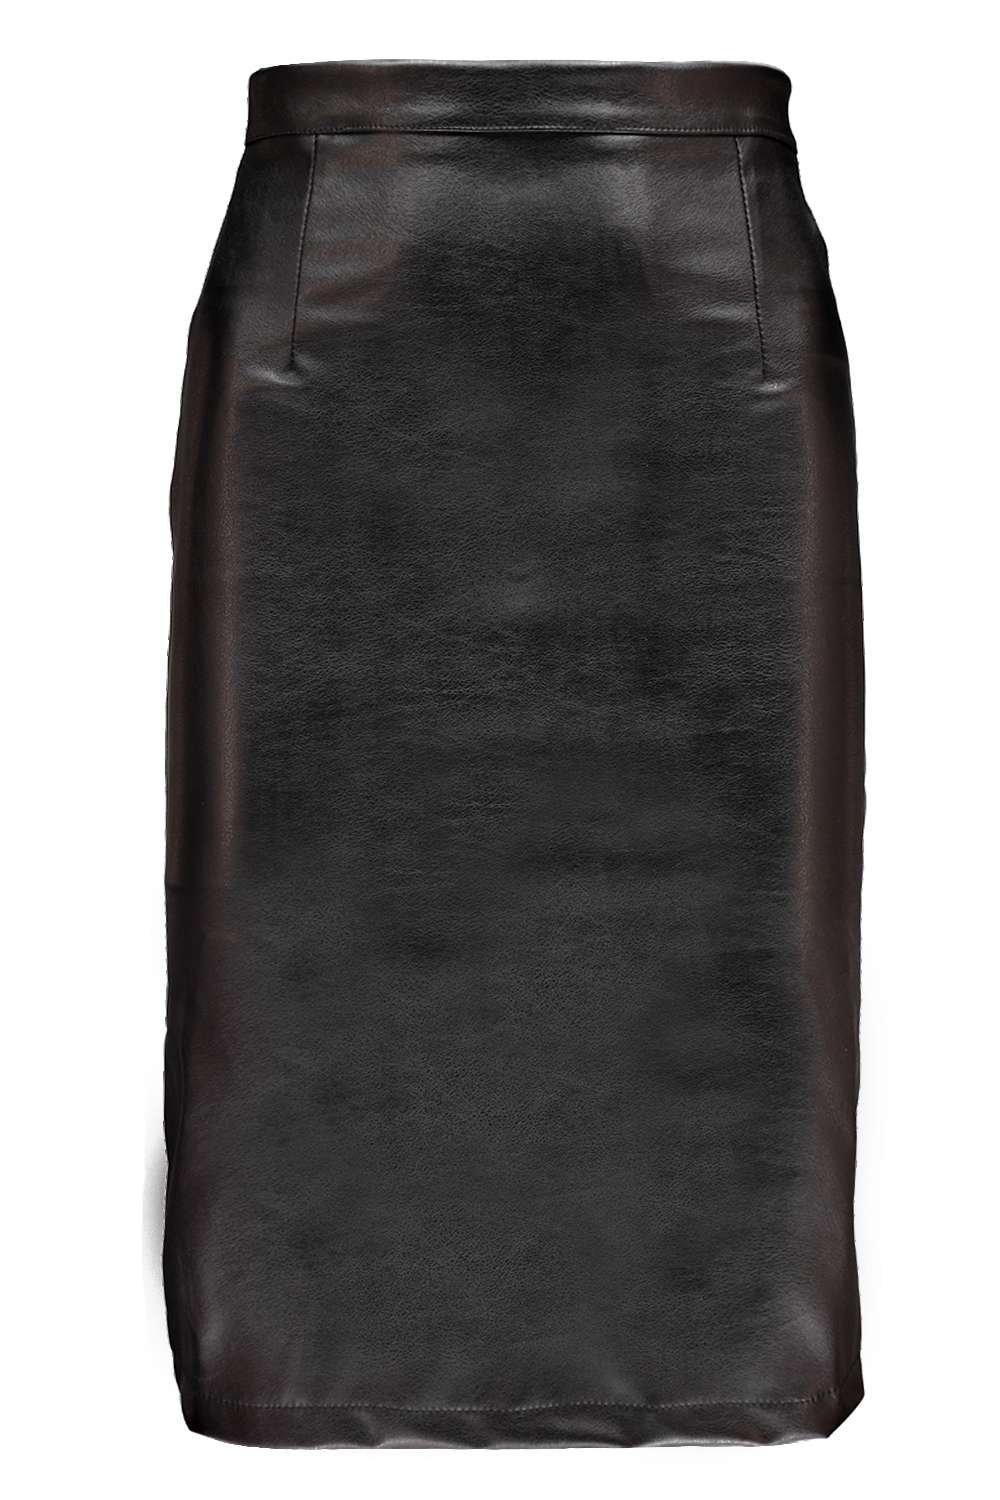 Boohoo Womens Marisa Faux Leather Pencil Skirt | eBay